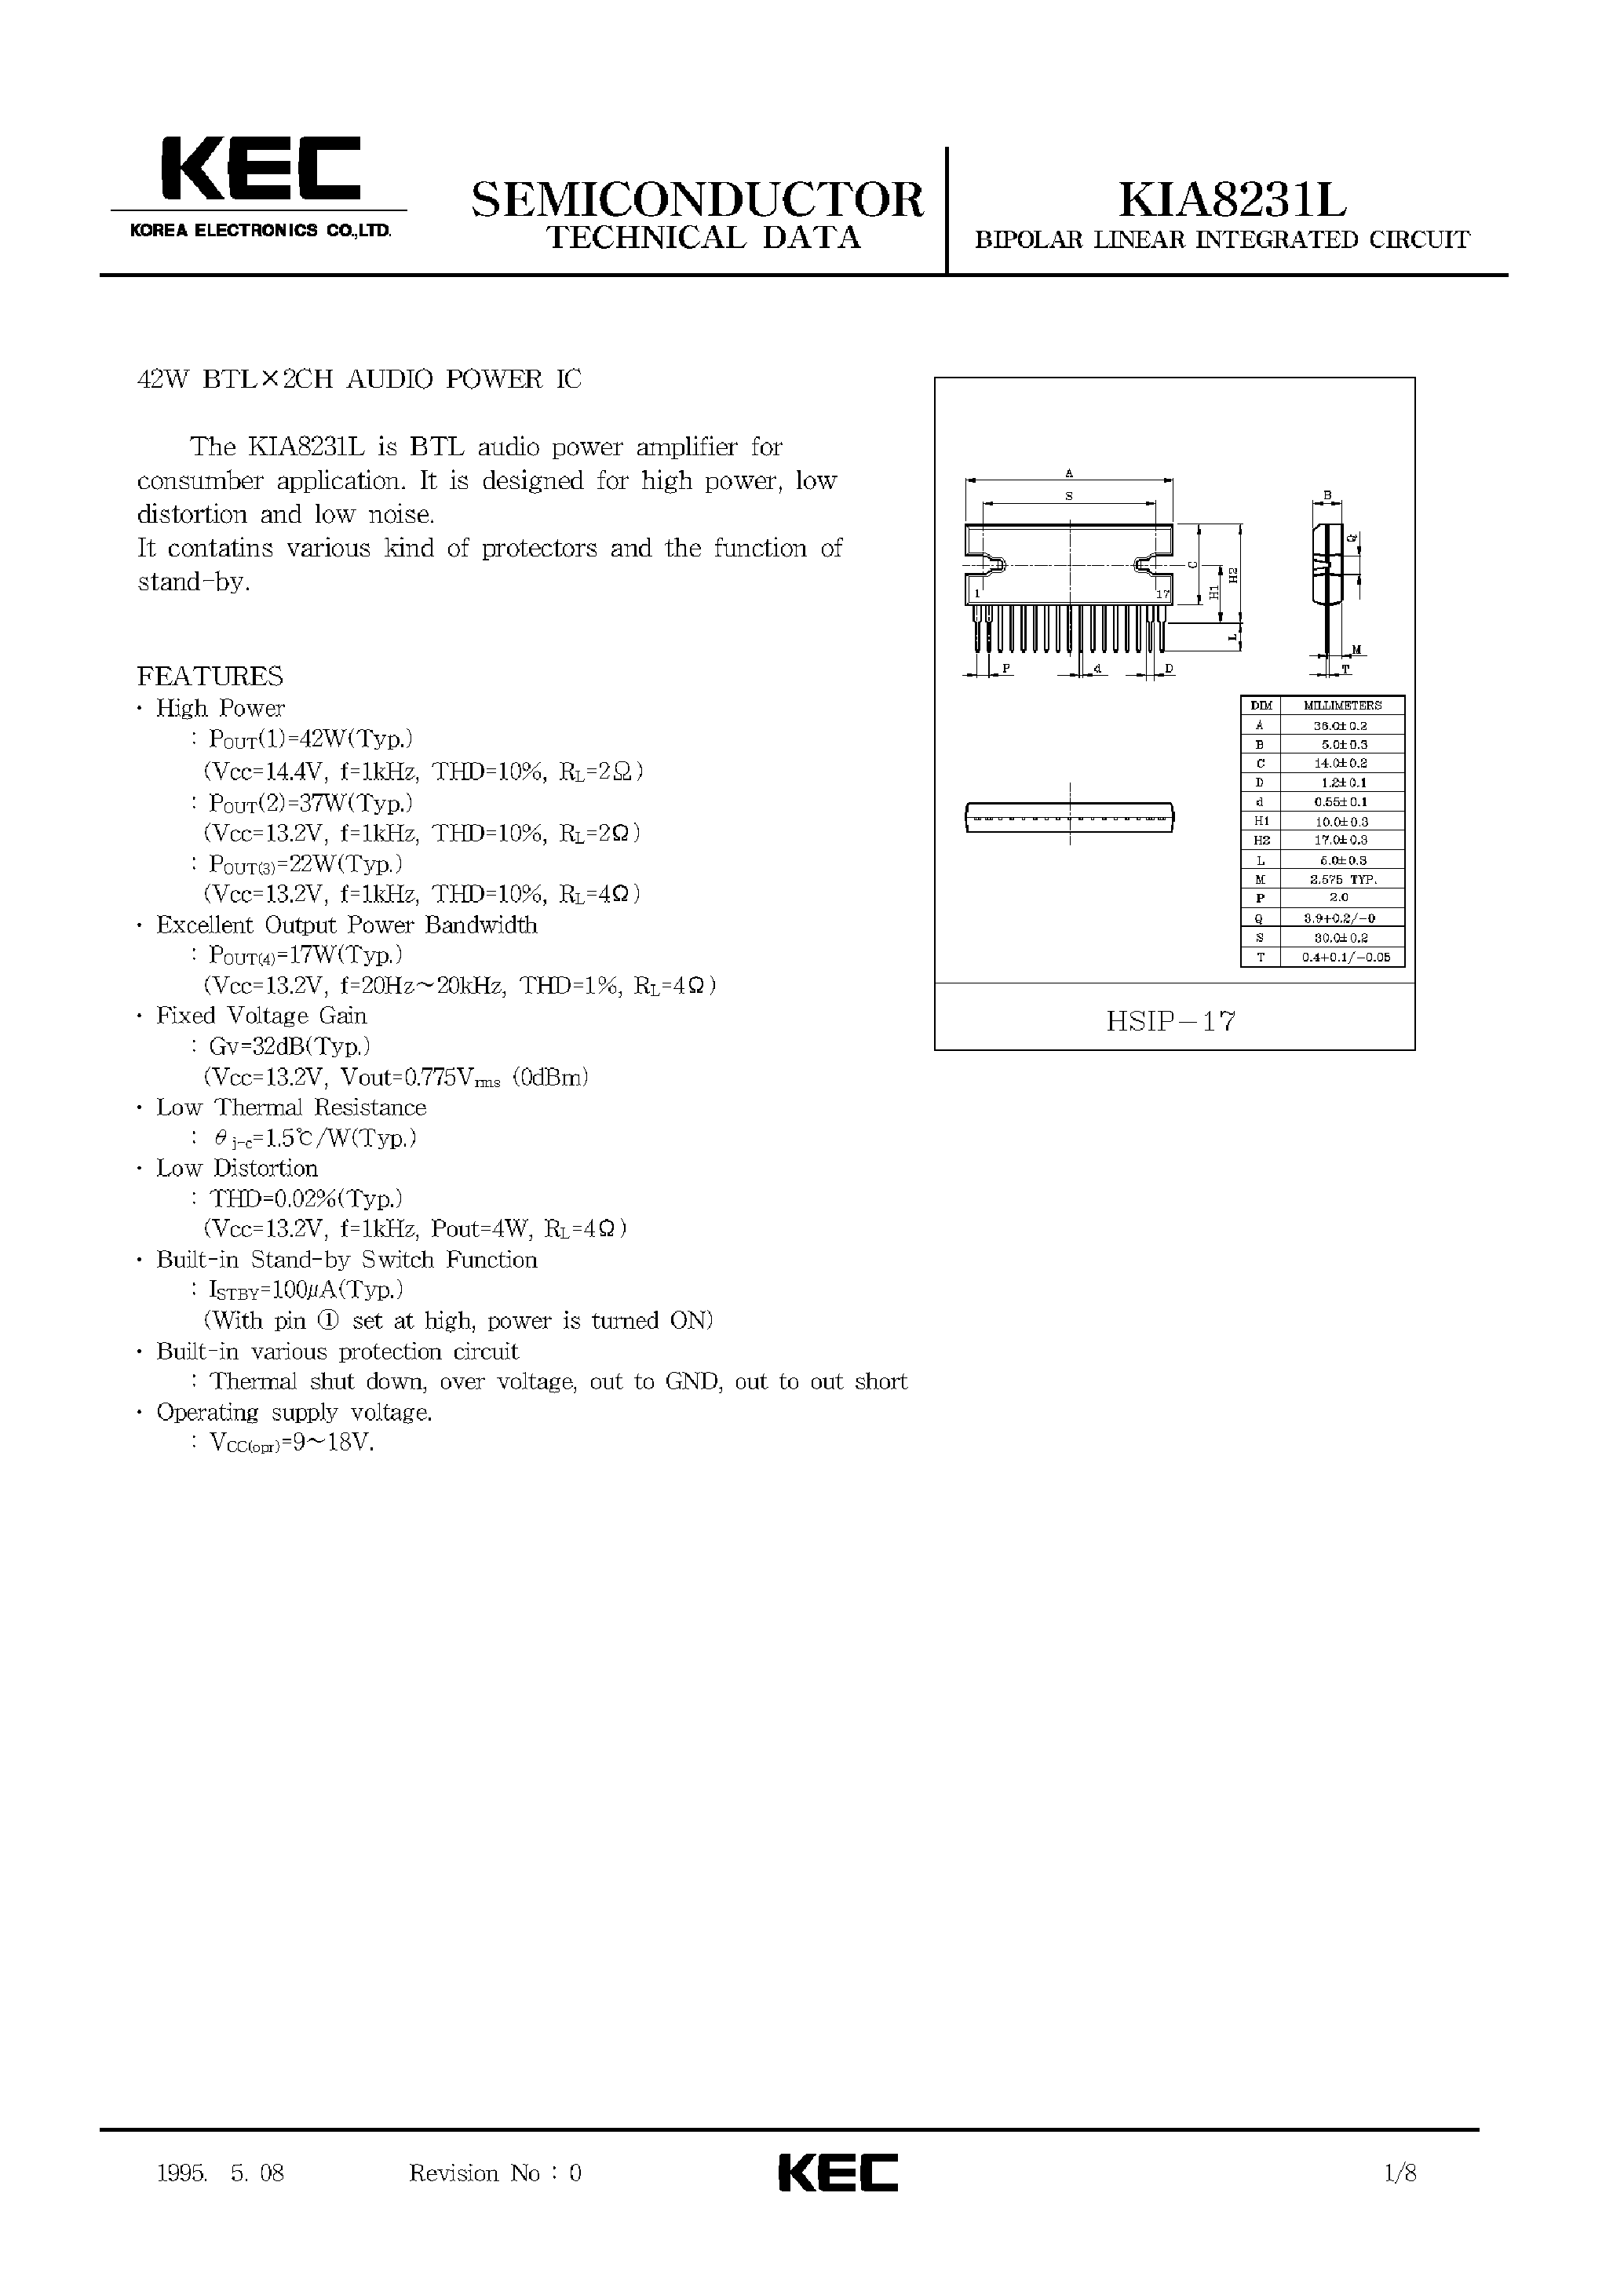 Даташит KIA8231L - BIPOLAR LINEAR INTEGRATED CIRCUIT (42W BTL X 2CH AUDIO POWER IC) страница 1